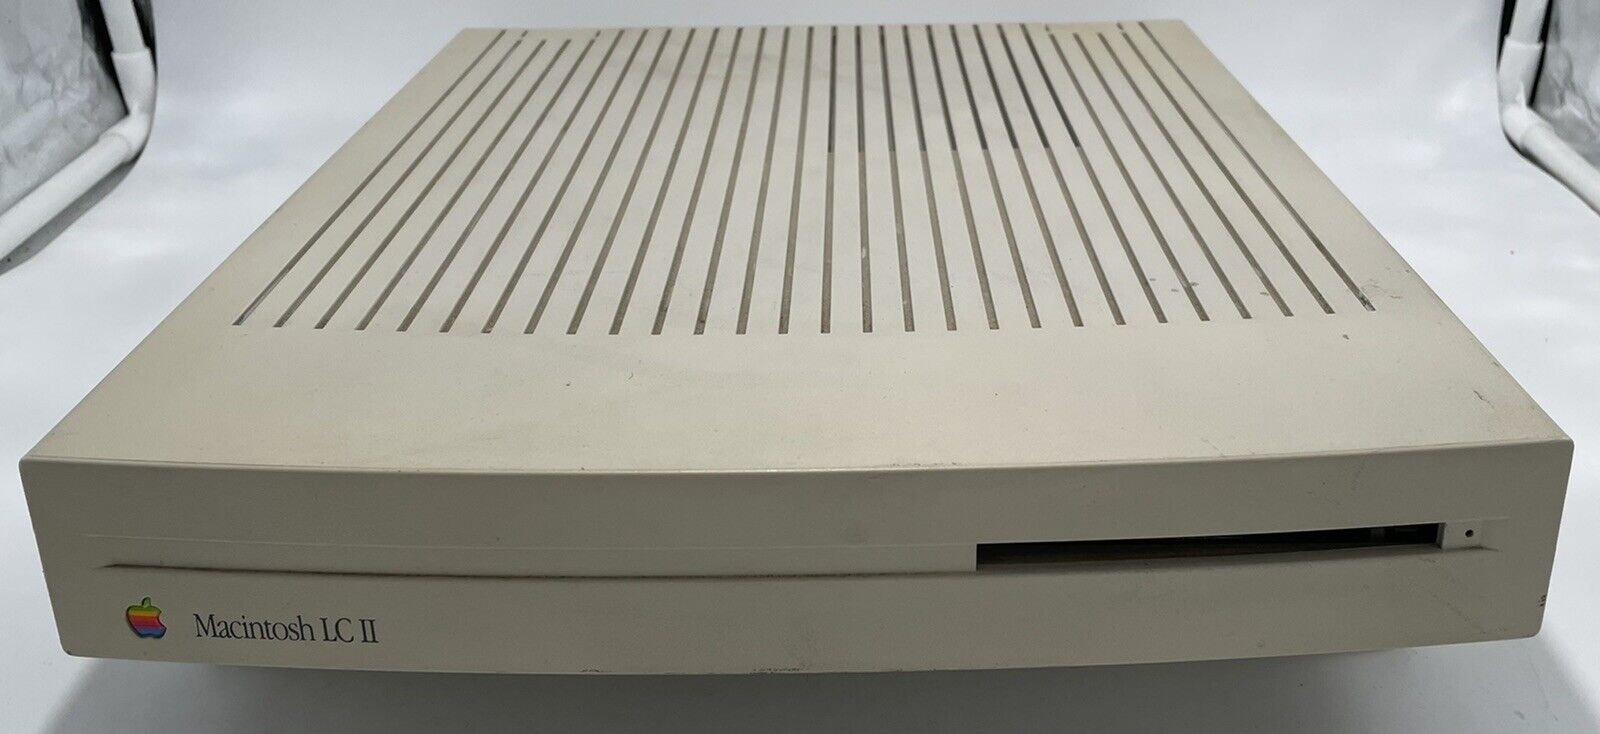 Vintage 1992 Apple Macintosh LC II M1700 - Mac OS System 7.1 - Working